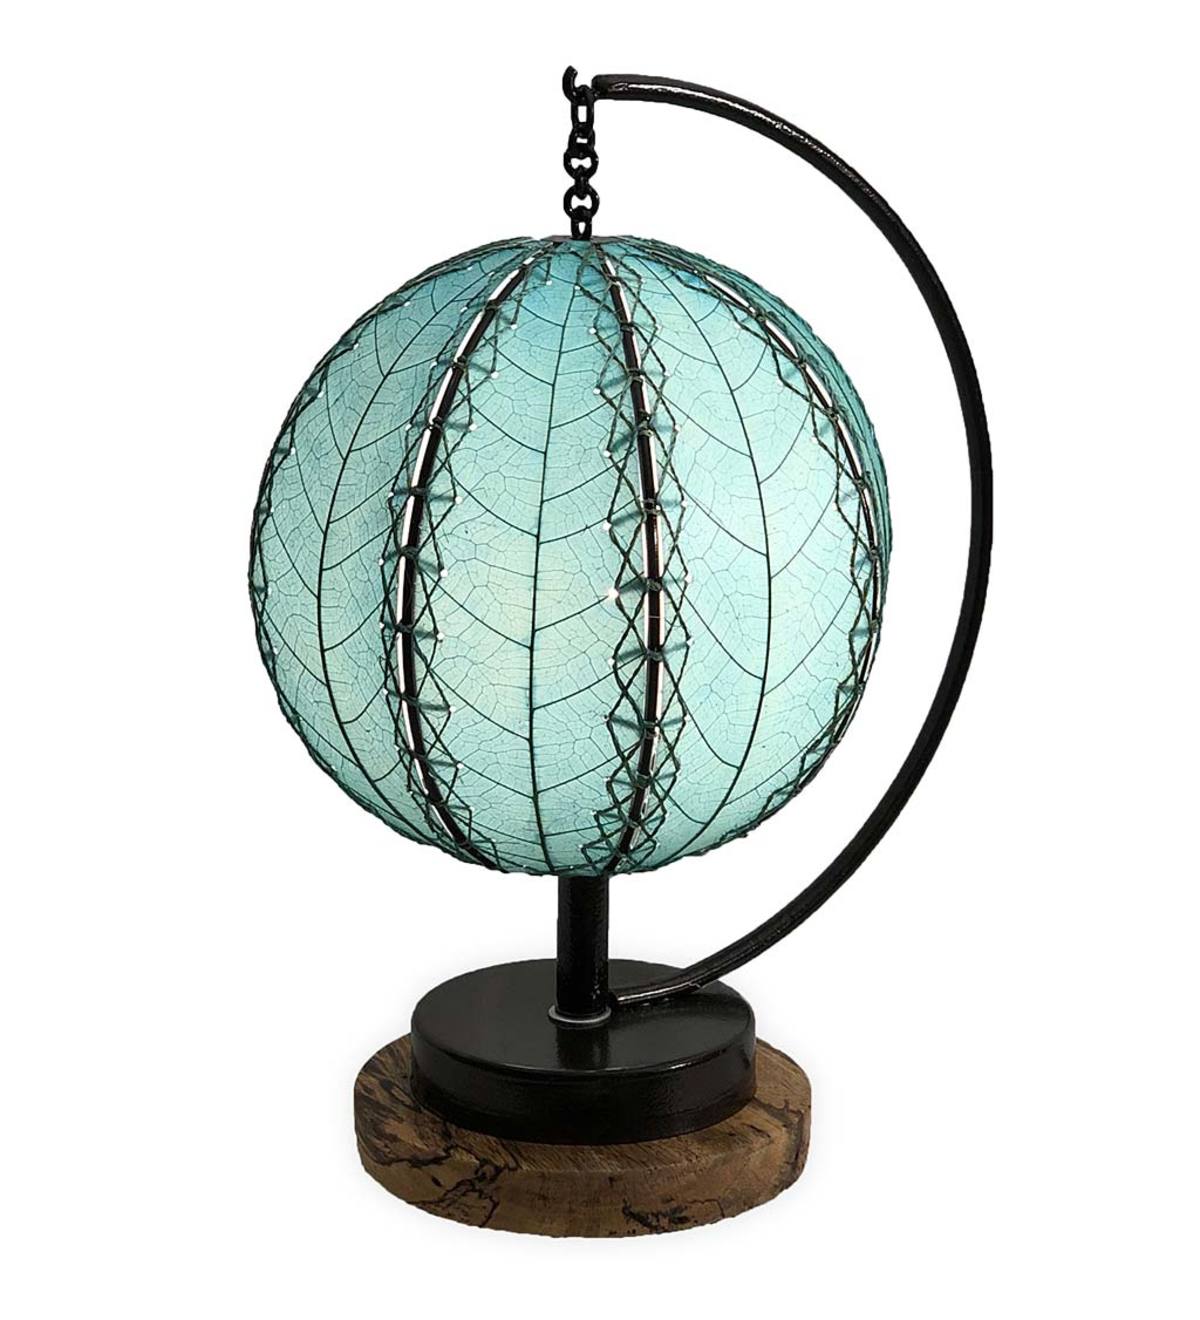 Orb Table Lamp with Leaf Shade - Aqua